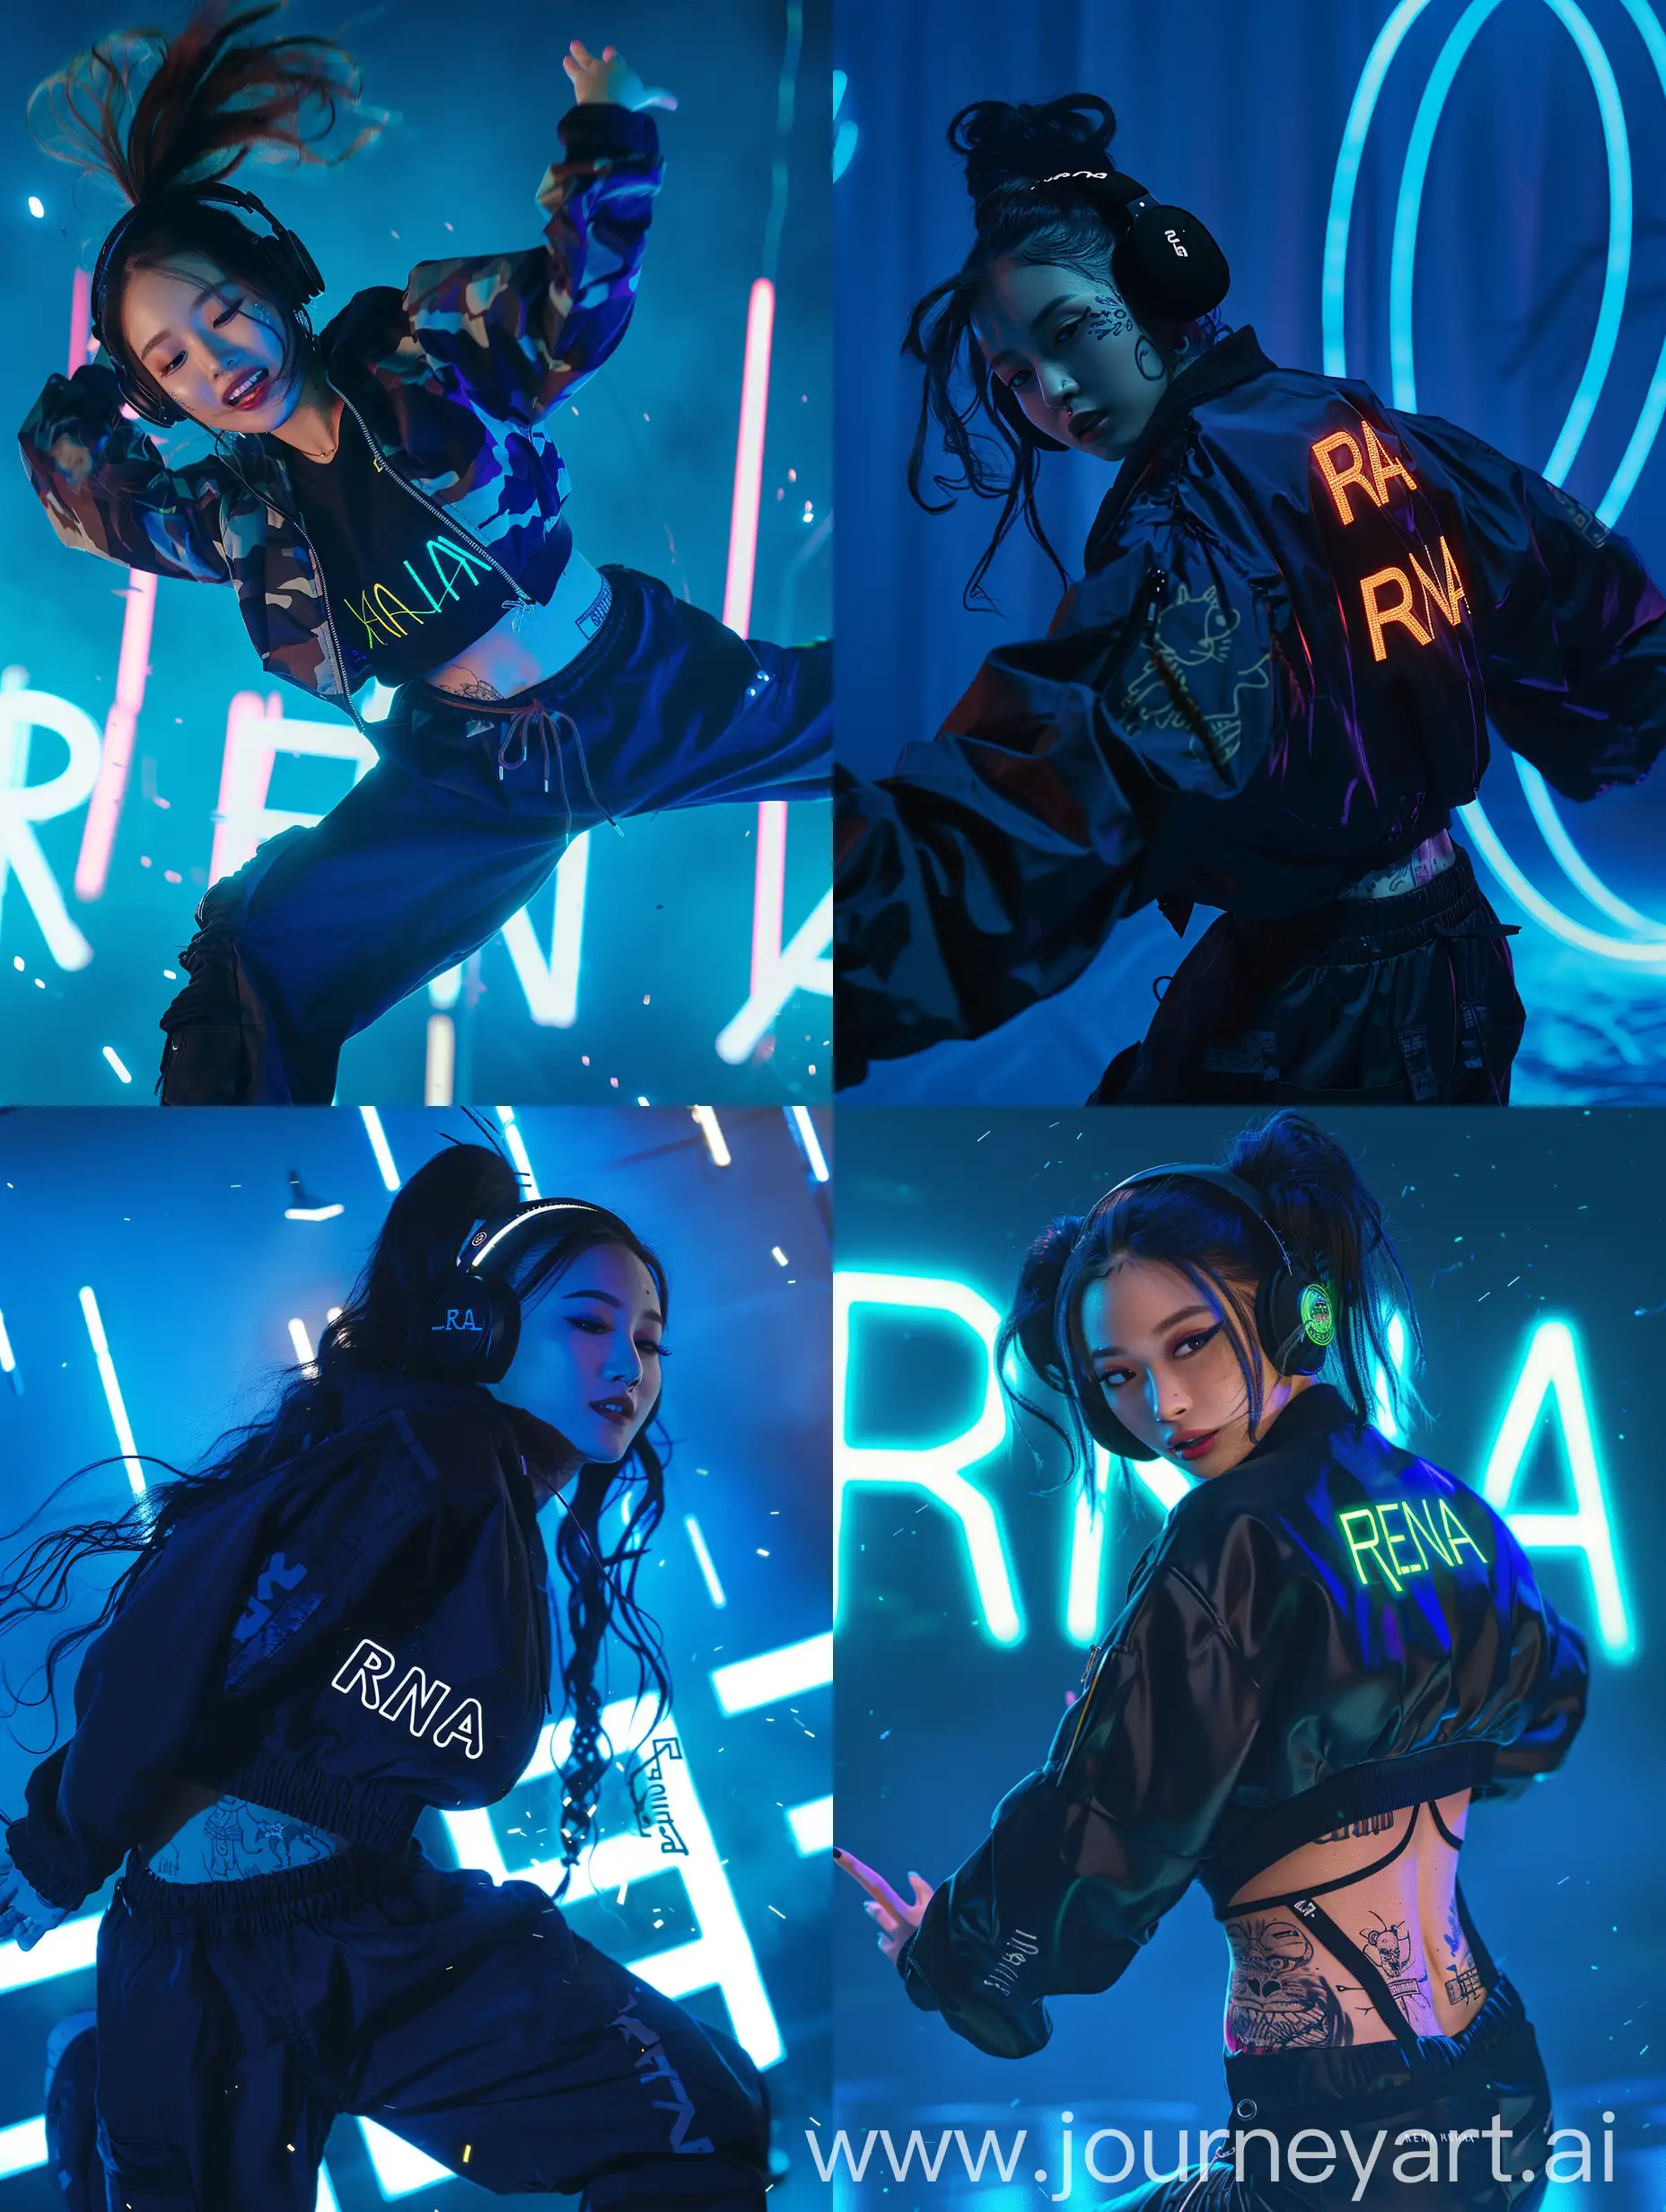 Korean-Woman-Dancing-in-Air-with-RENA-Glowing-Headphones